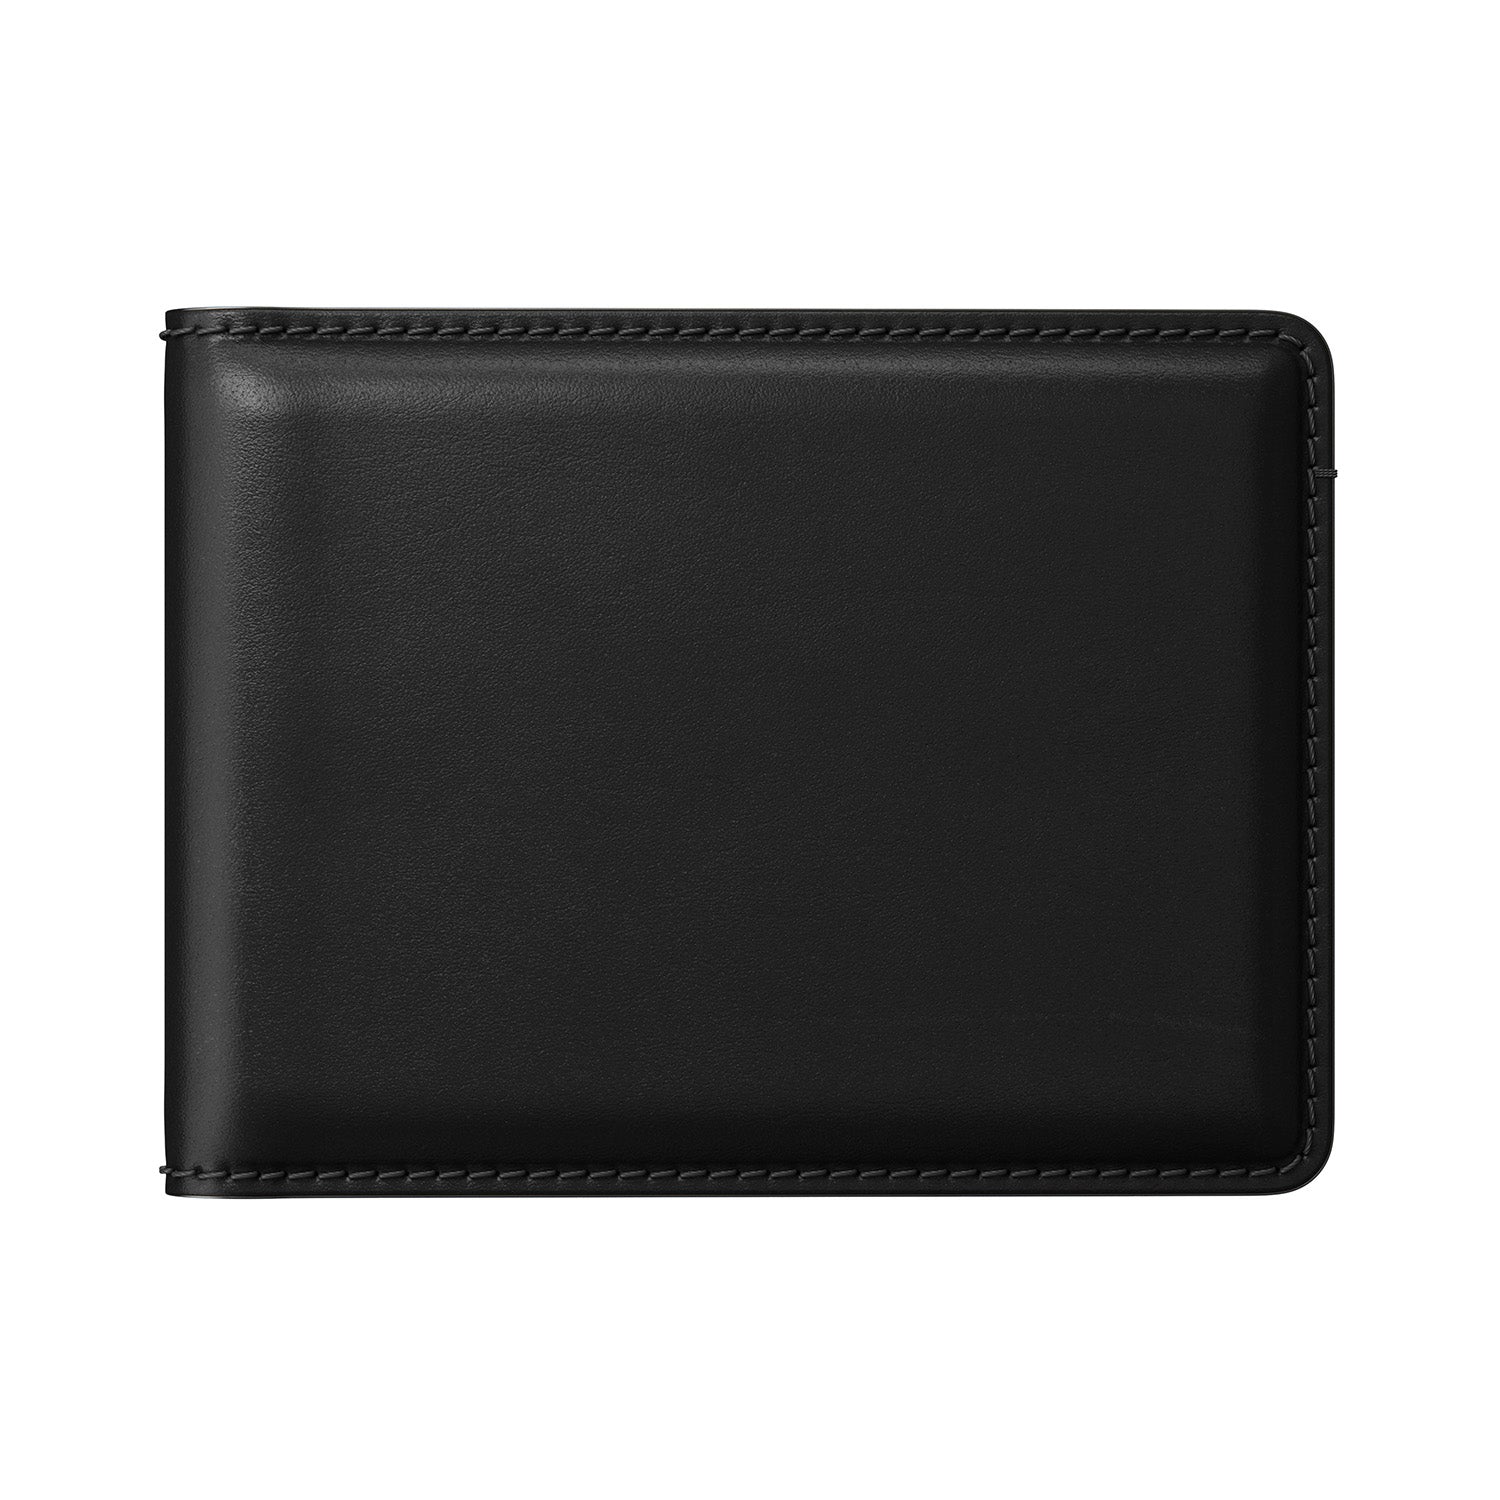 NOMAD Horween Leather Bifold Wallet Wallets & Money Clips NOMAD Black 